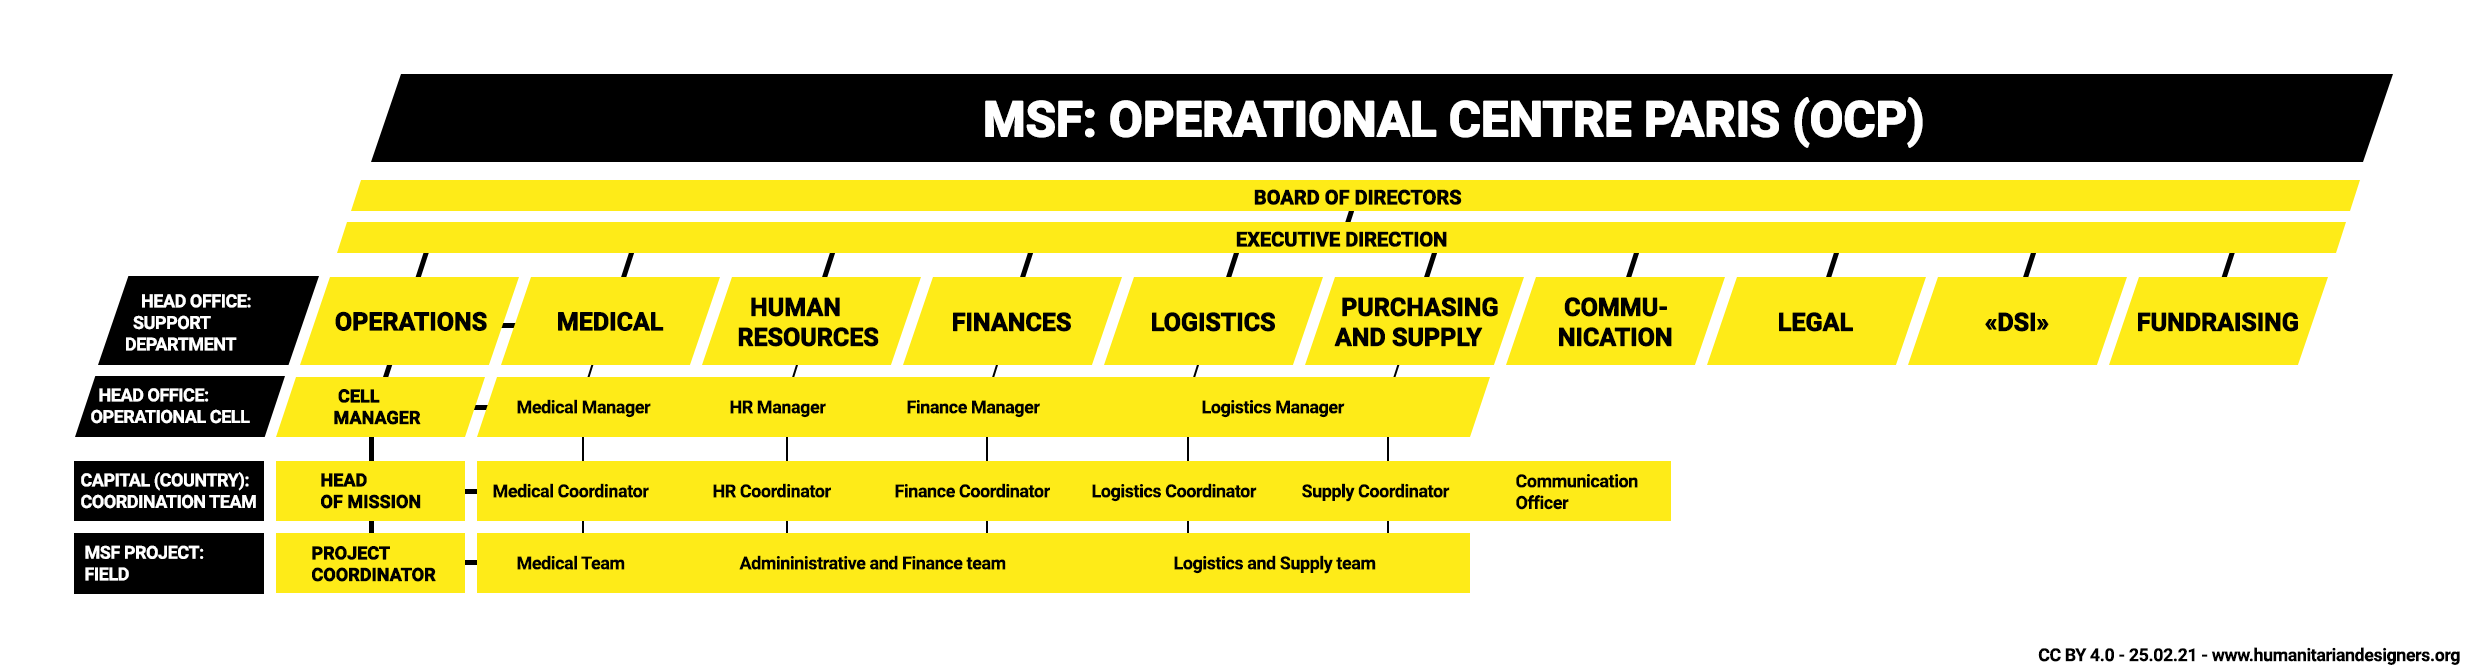 Médecins Sans Frontières Operational Centre Paris - Organisational chart MSF OCP